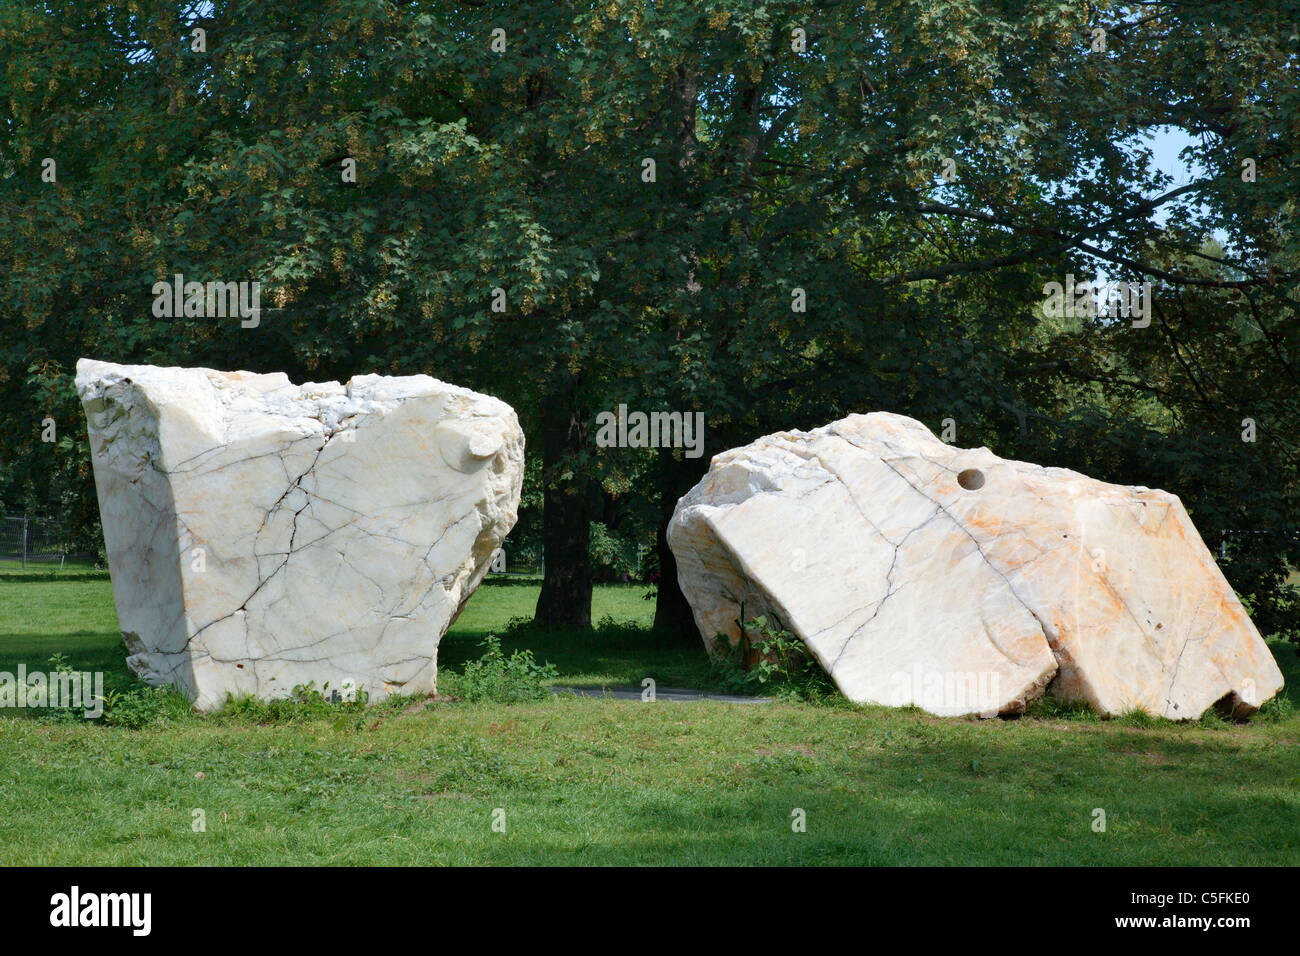 Global Stone Project, Tiergarten, Berlin, Germany - white quartz crystal from Europe 'Awakening' Stock Photo